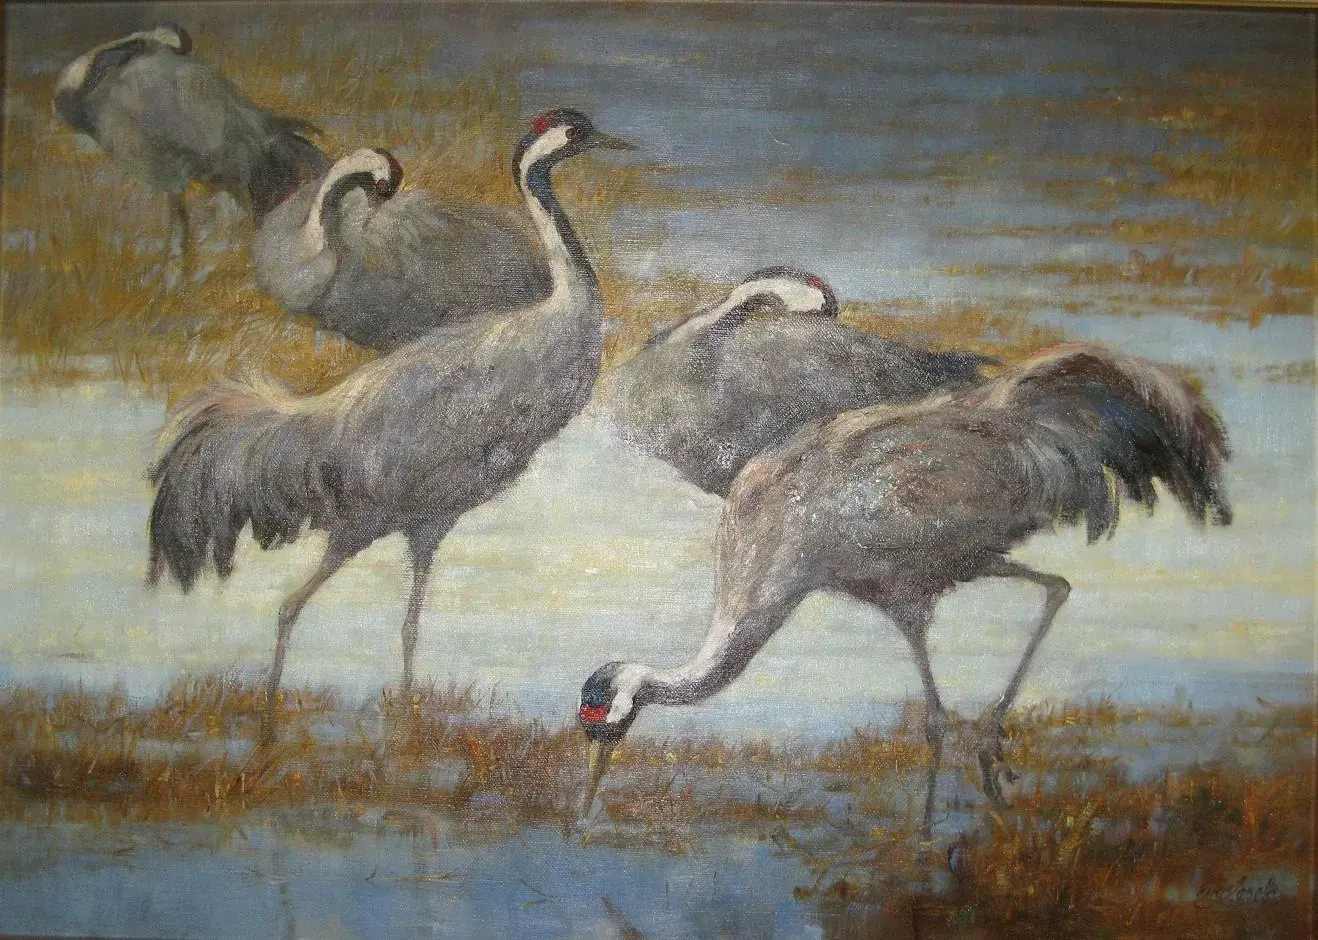 Cranes - Warta backwaters